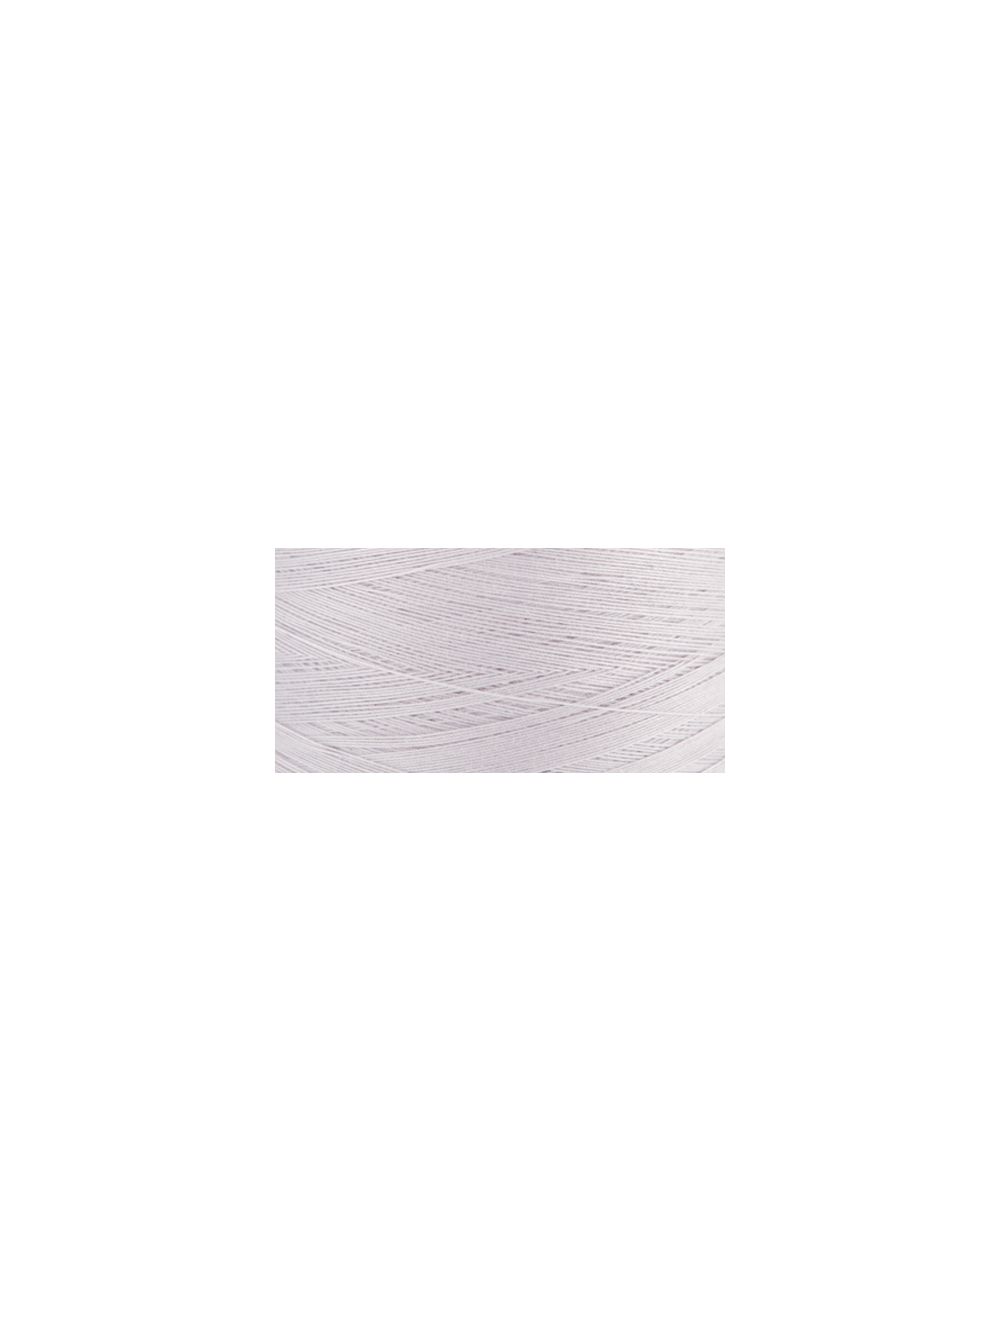 Gutermann Natural Cotton Thread 800m/875yds Sandy Grey